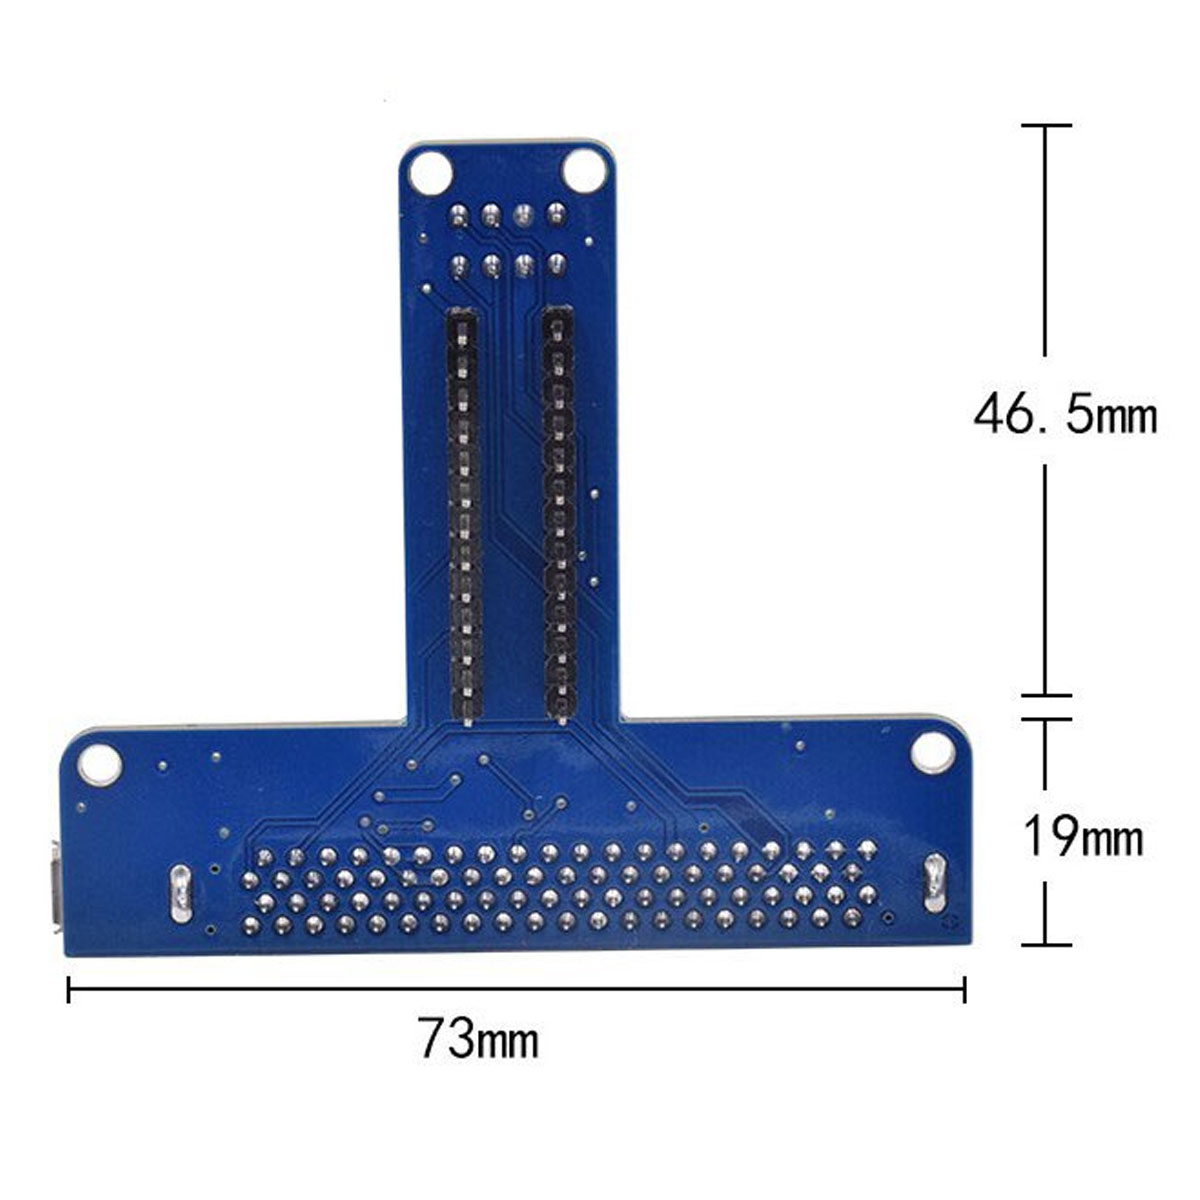 Shield adaptador expansor GPIO para conectar Placa BBC Microbit Micro:bit na Protoboard